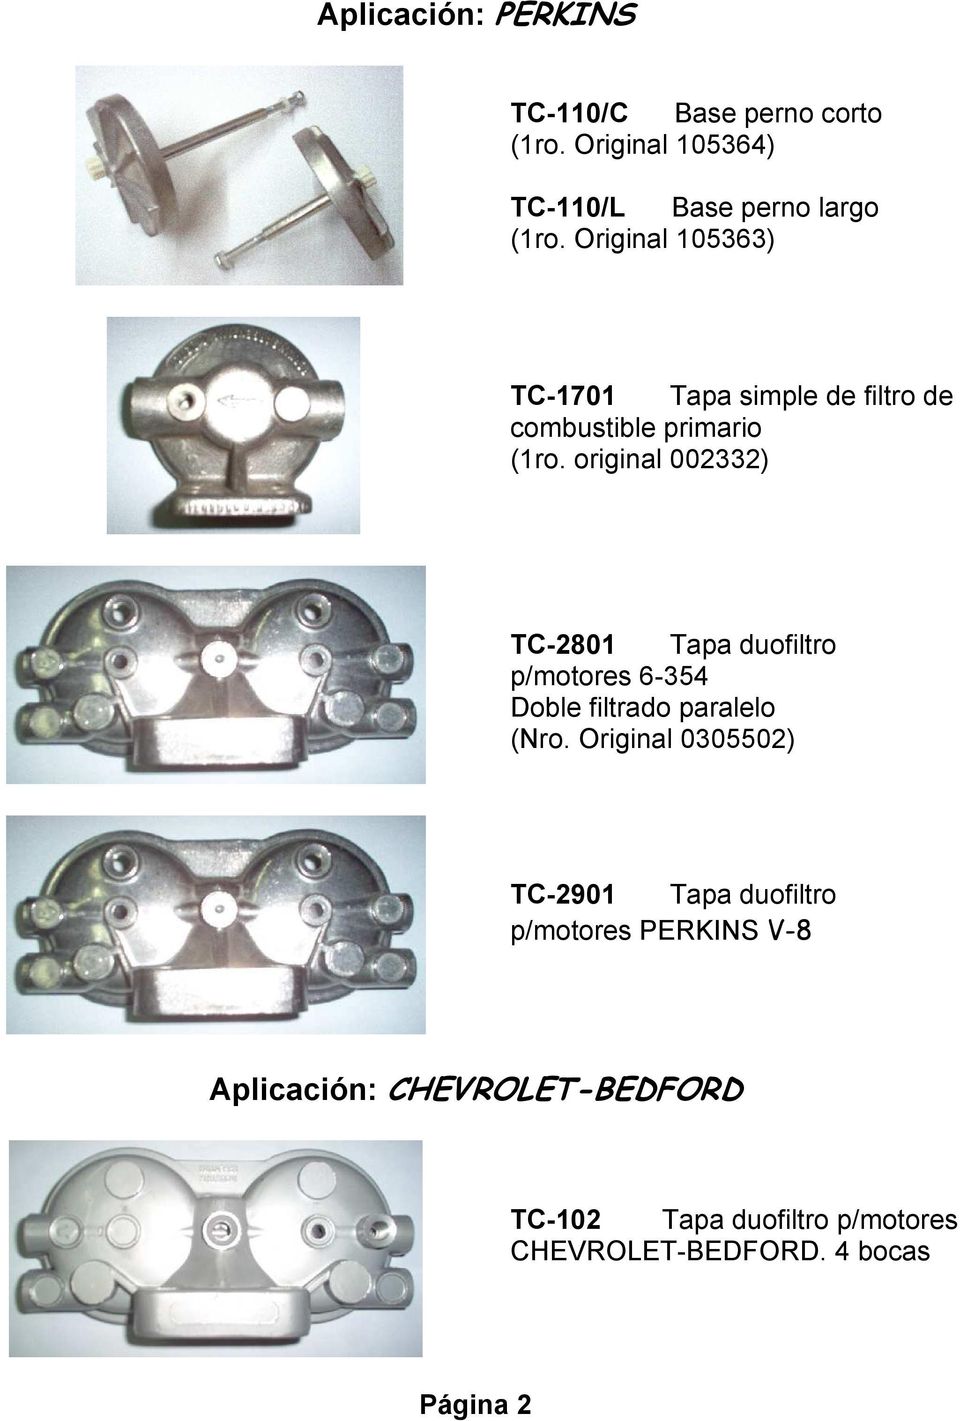 original 002332) TC-2801 Tapa duofiltro p/motores 6-354 Doble filtrado paralelo (Nro.